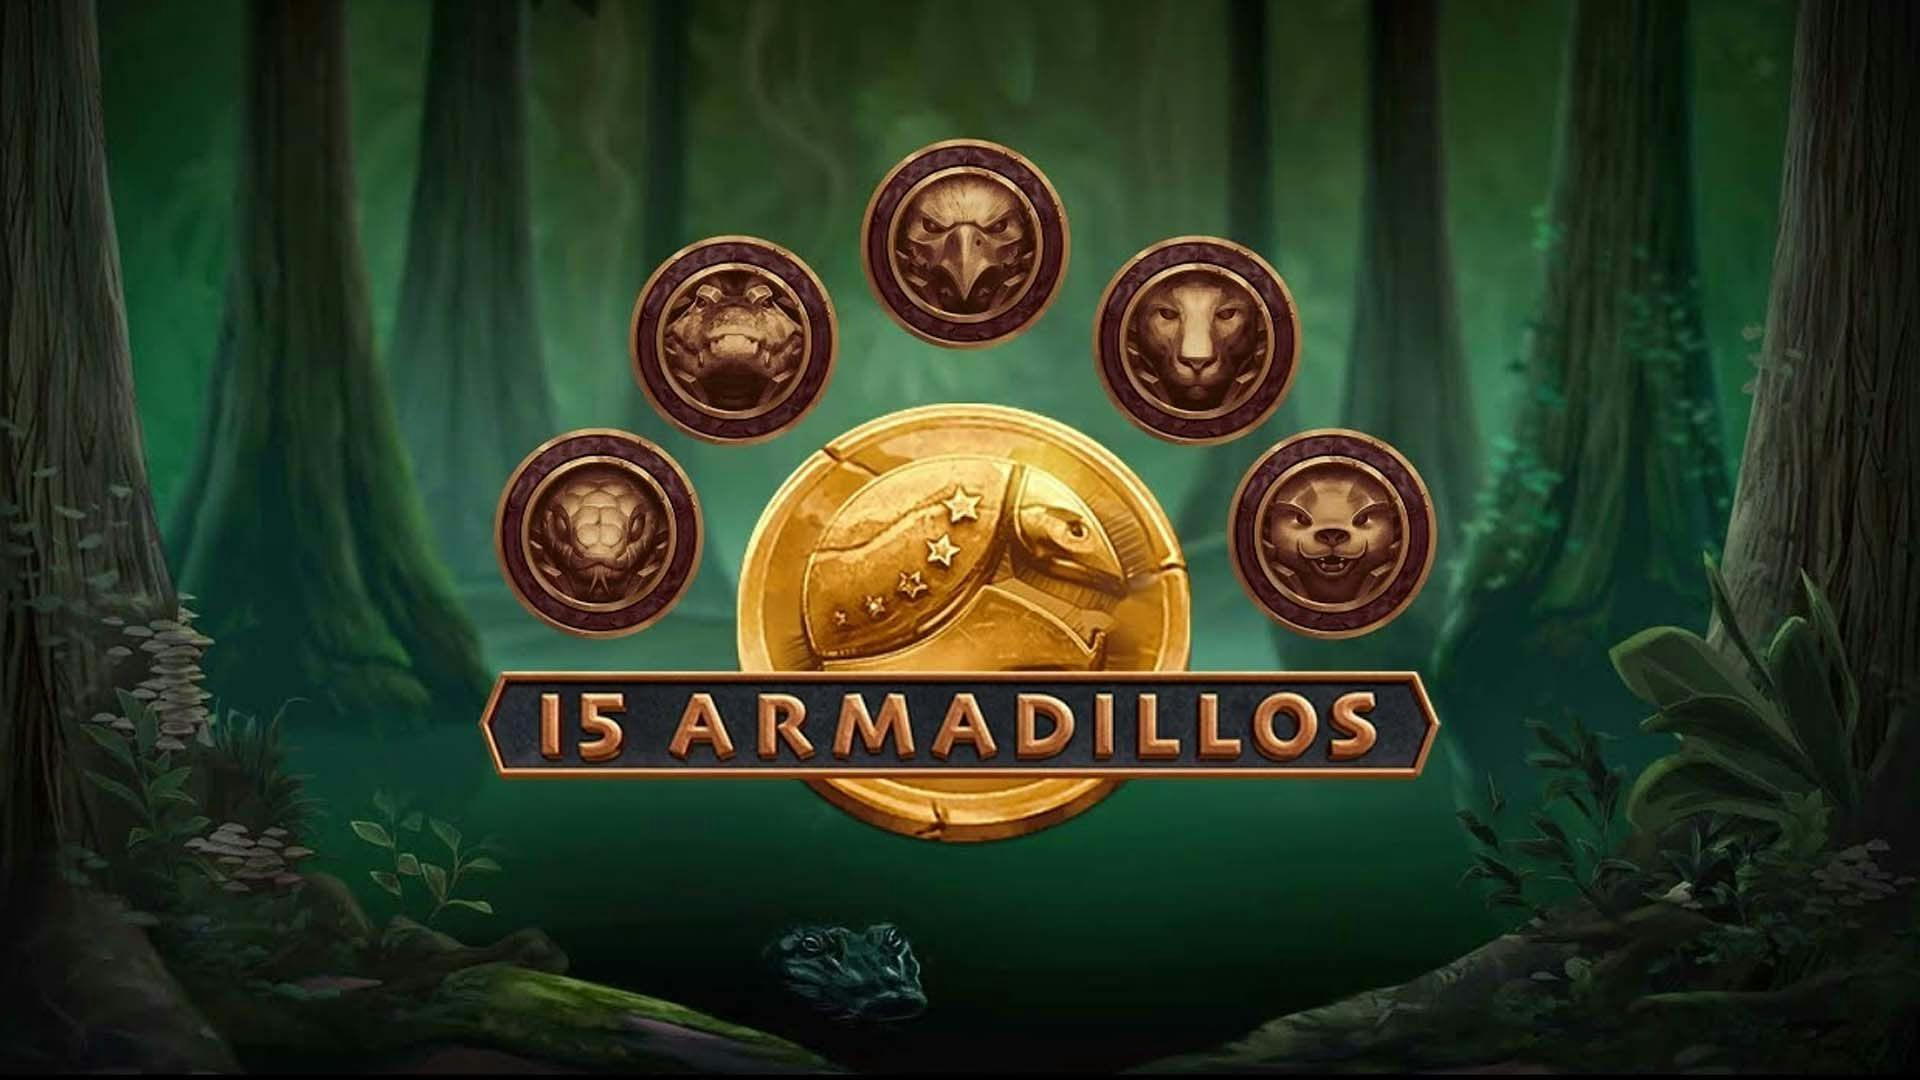 15 Armadillos Slot Machine Online Free Game Play